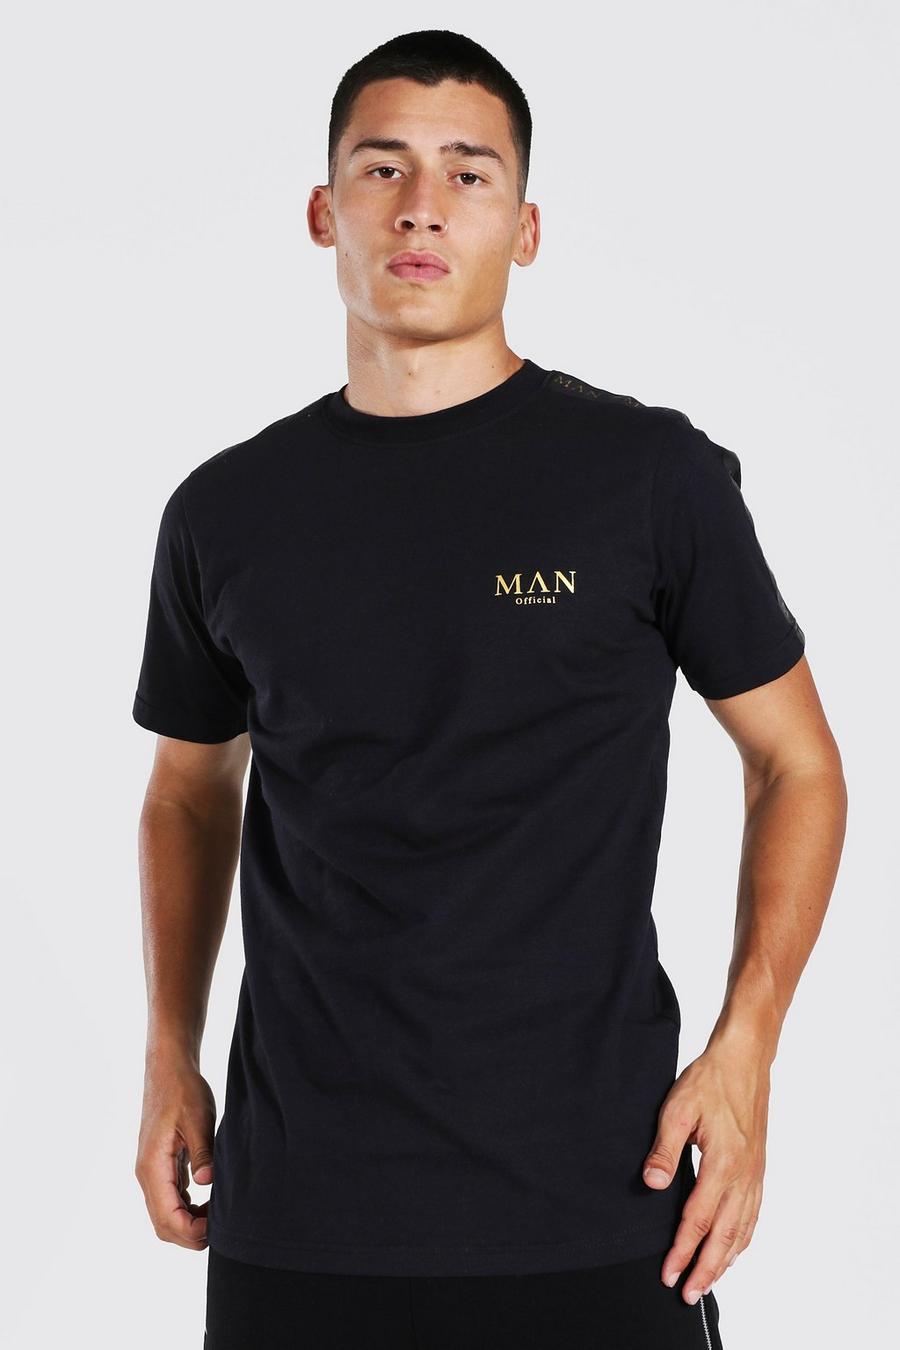 T-shirt Man Gold con striscia, Black negro image number 1